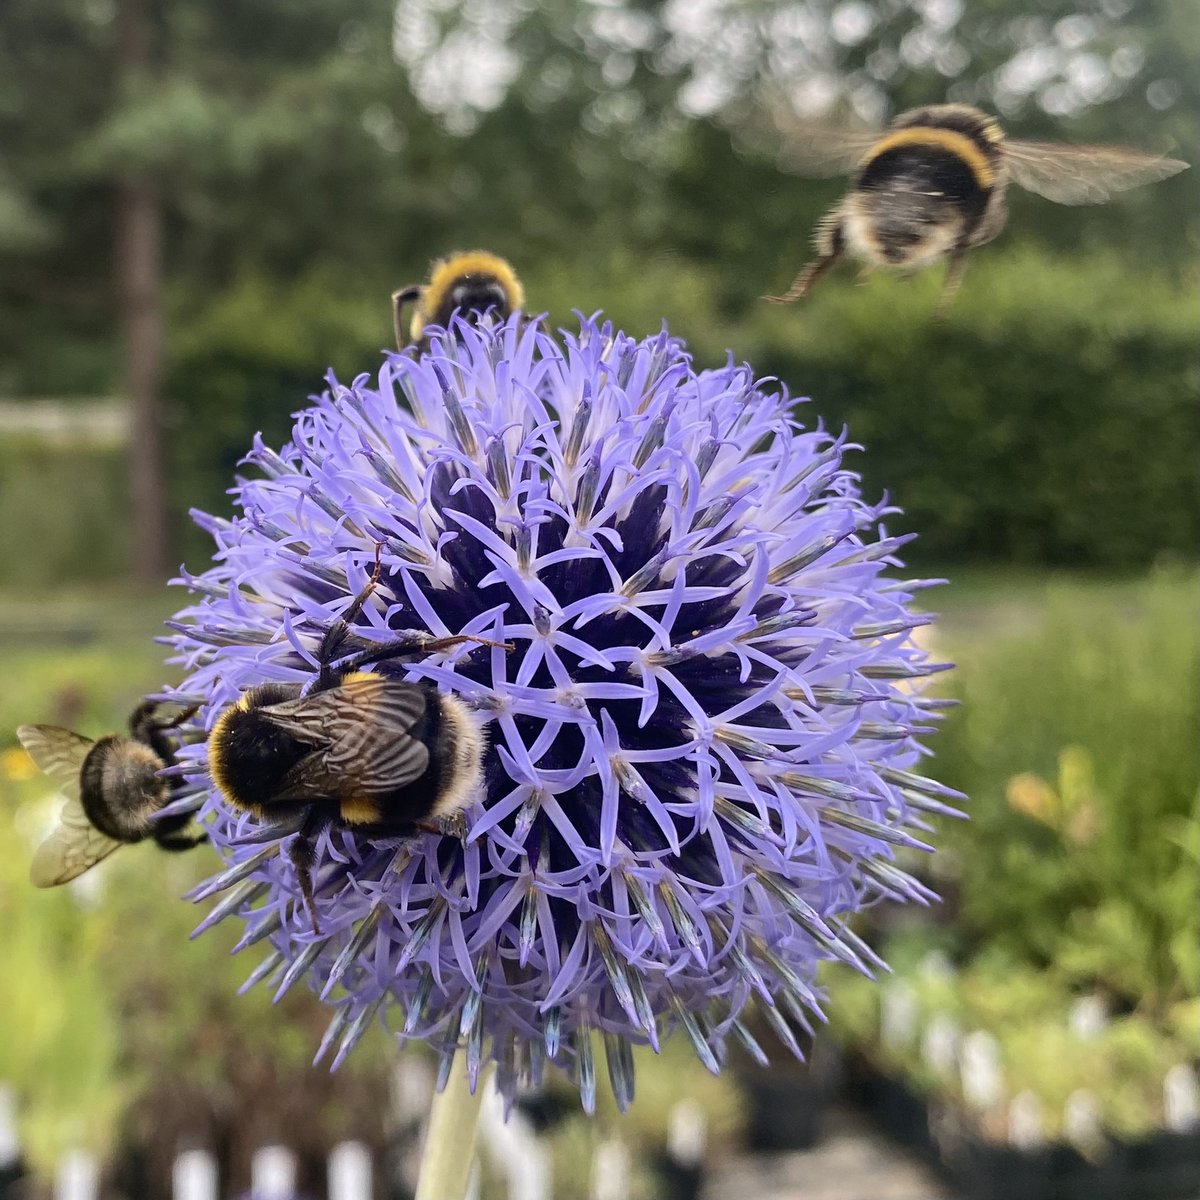 Echinops ‘Blue Globe’ is a hive of activity today! #polinators #bees #echinops #echinopsblueglobe #bumblebee #beelife #blueflowers #perennialplants #peatfree #insects